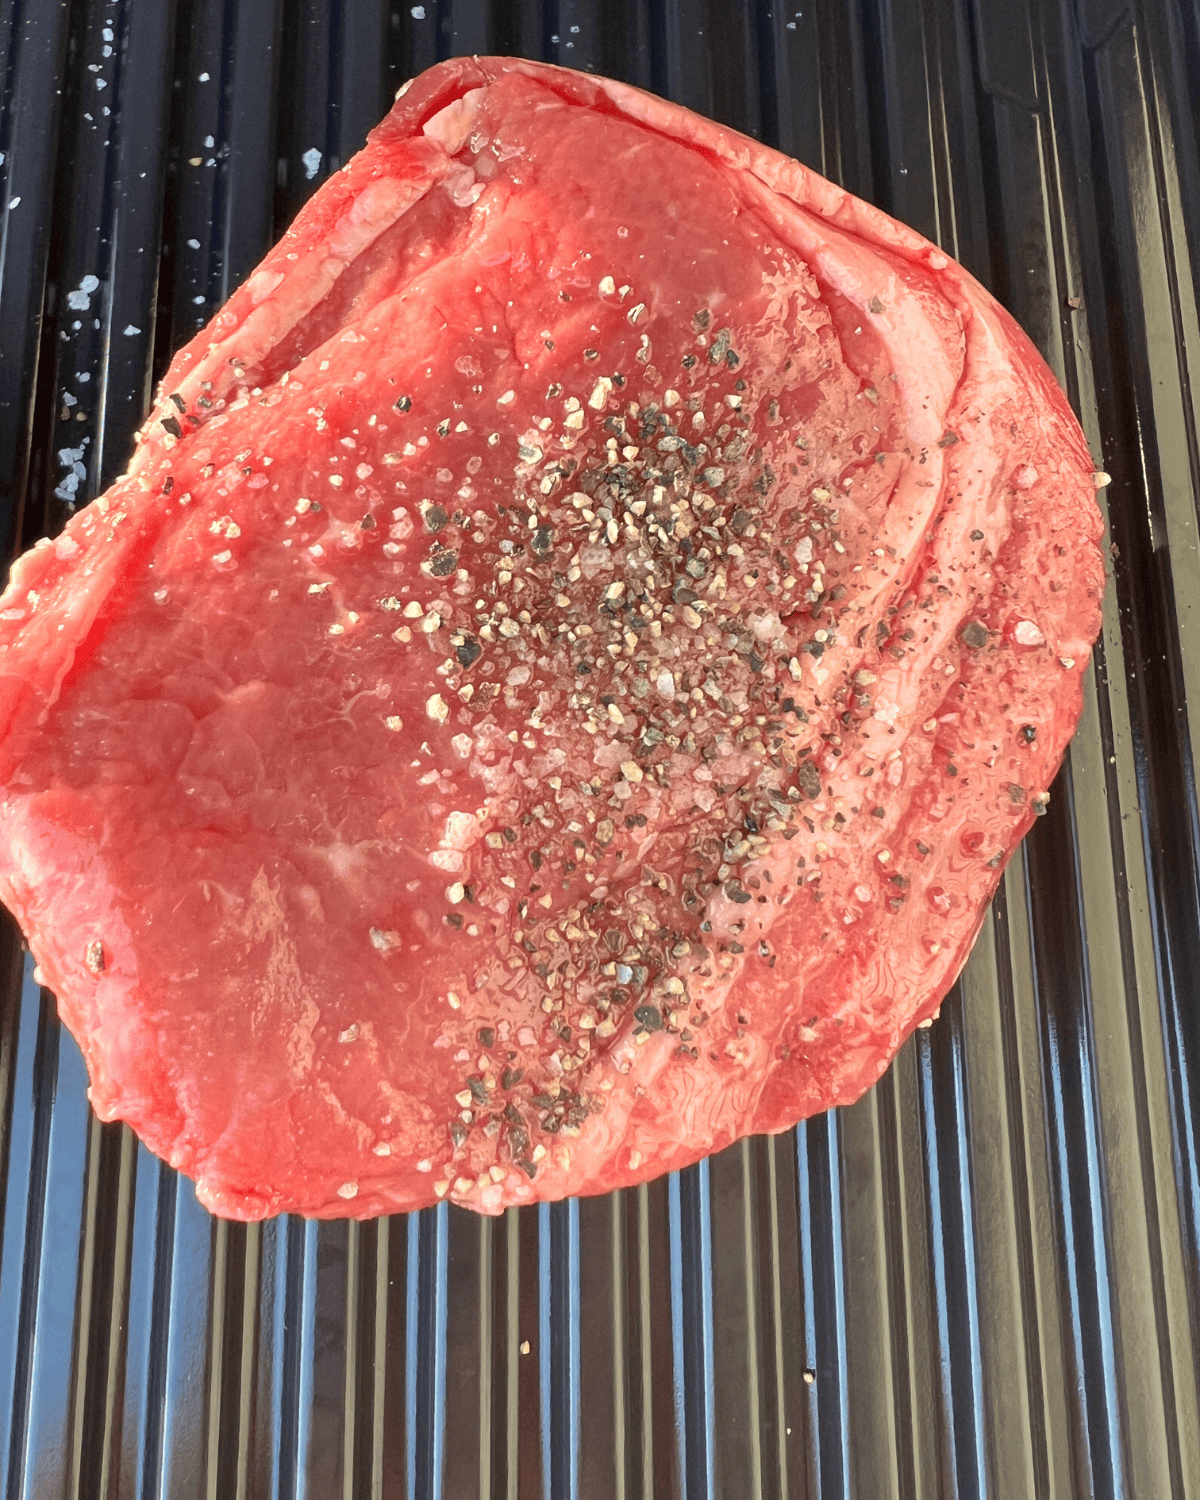 Seasoned steak placed on grill grates. 